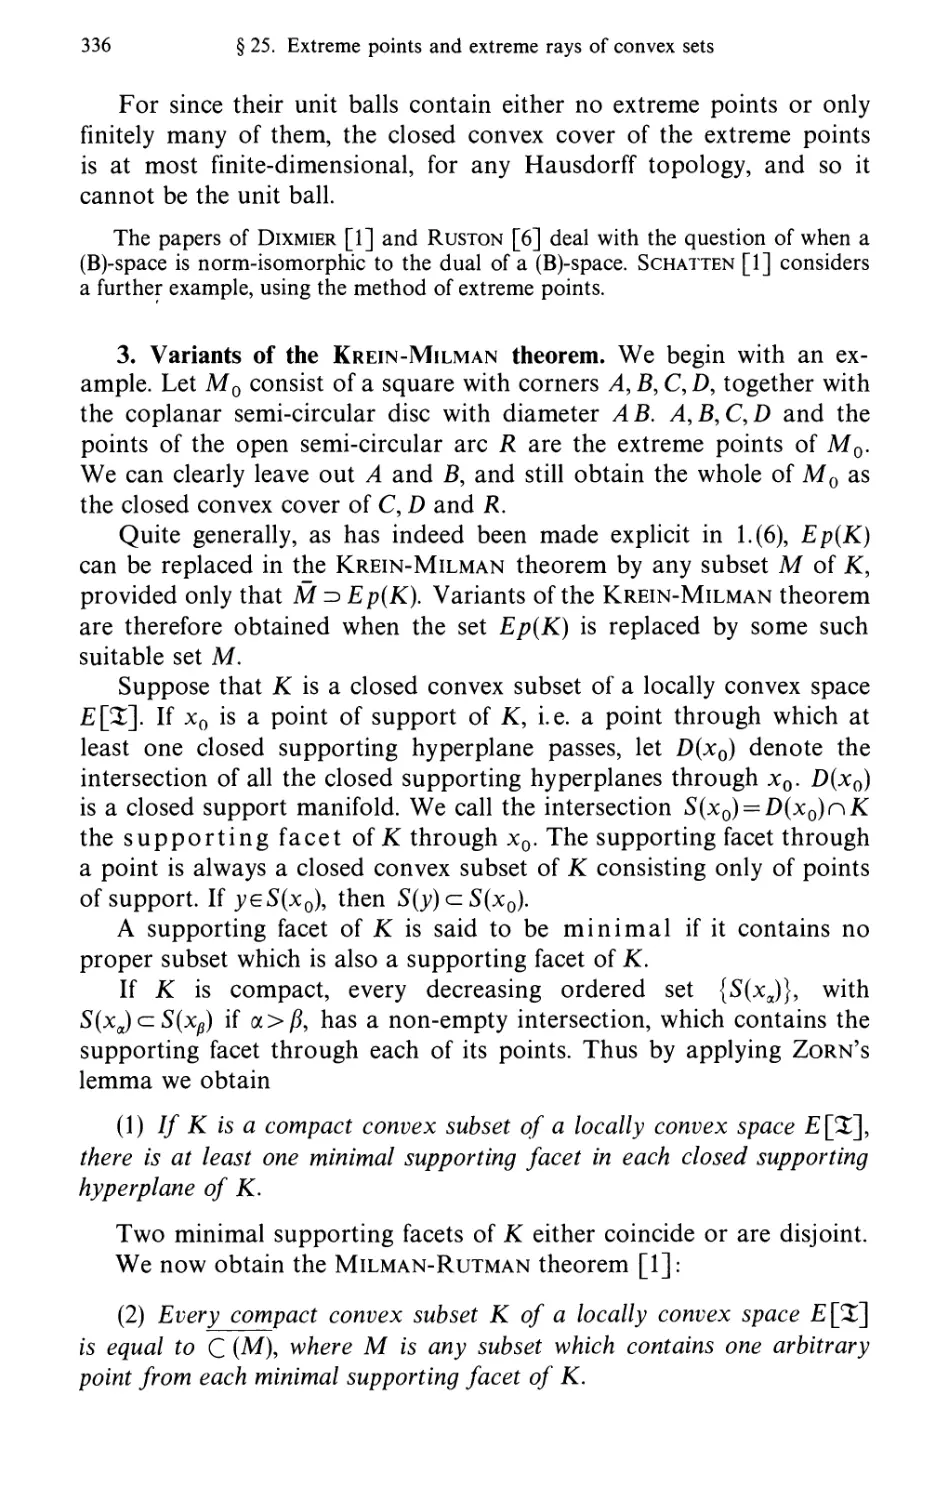 3. Variants of the Krein-Milman theorem